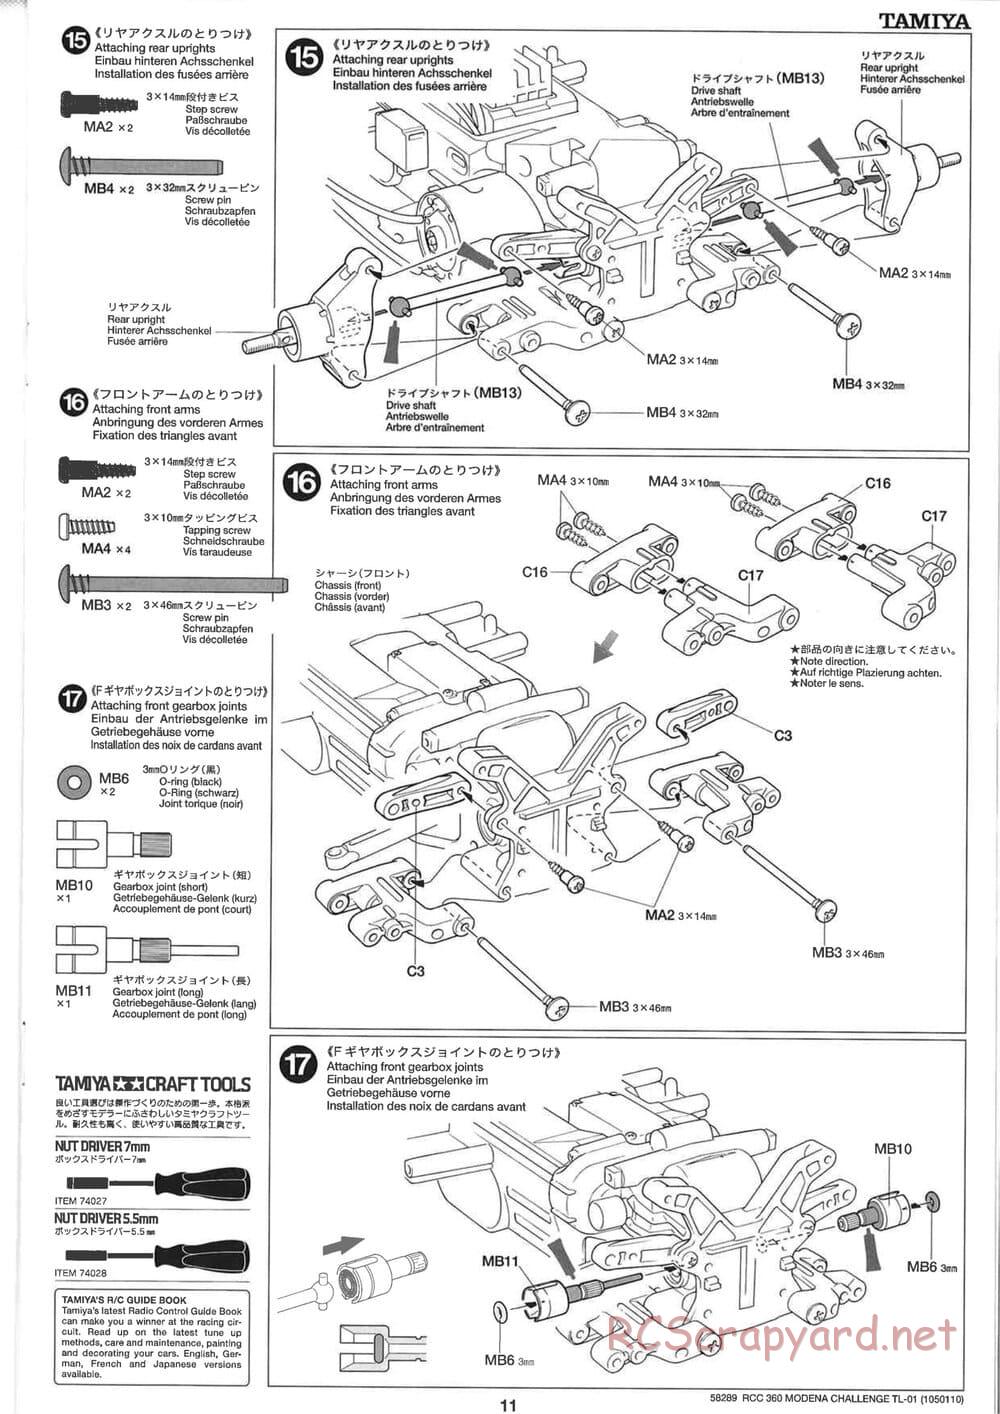 Tamiya - Ferrari 360 Modena Challenge - TL-01 Chassis - Manual - Page 11